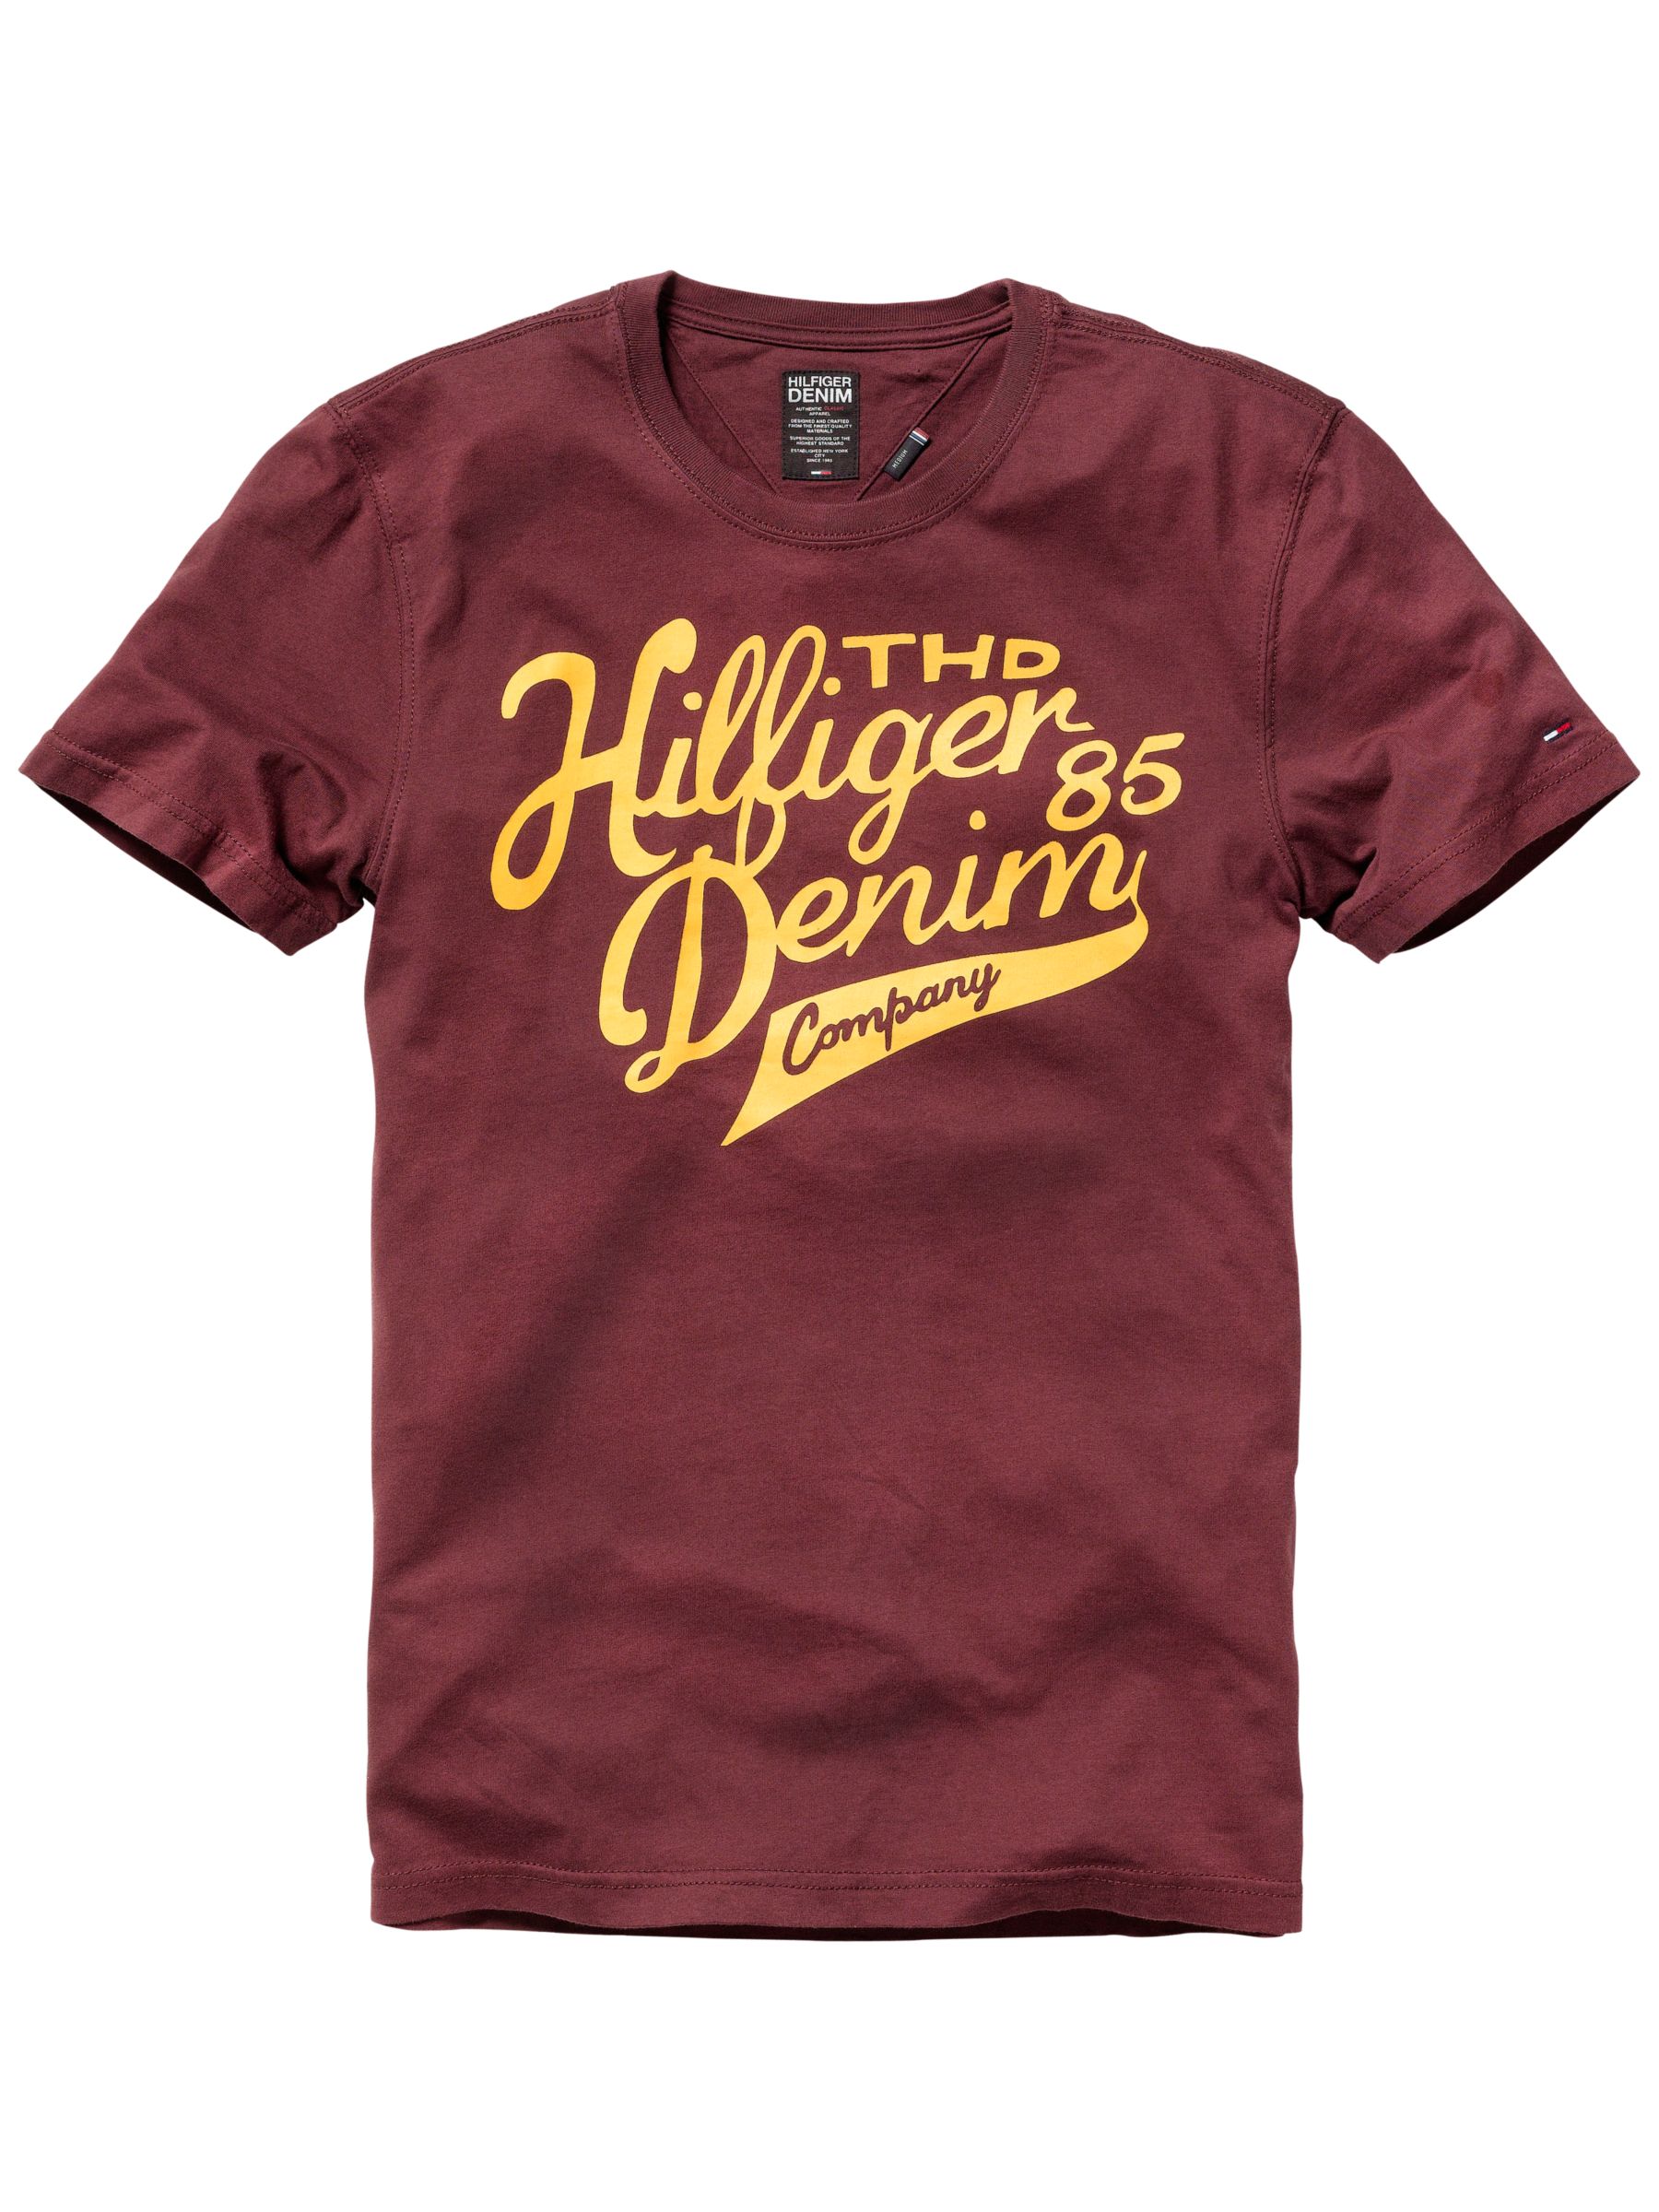 Hilfiger Denim Federer Logo Print T-Shirt,